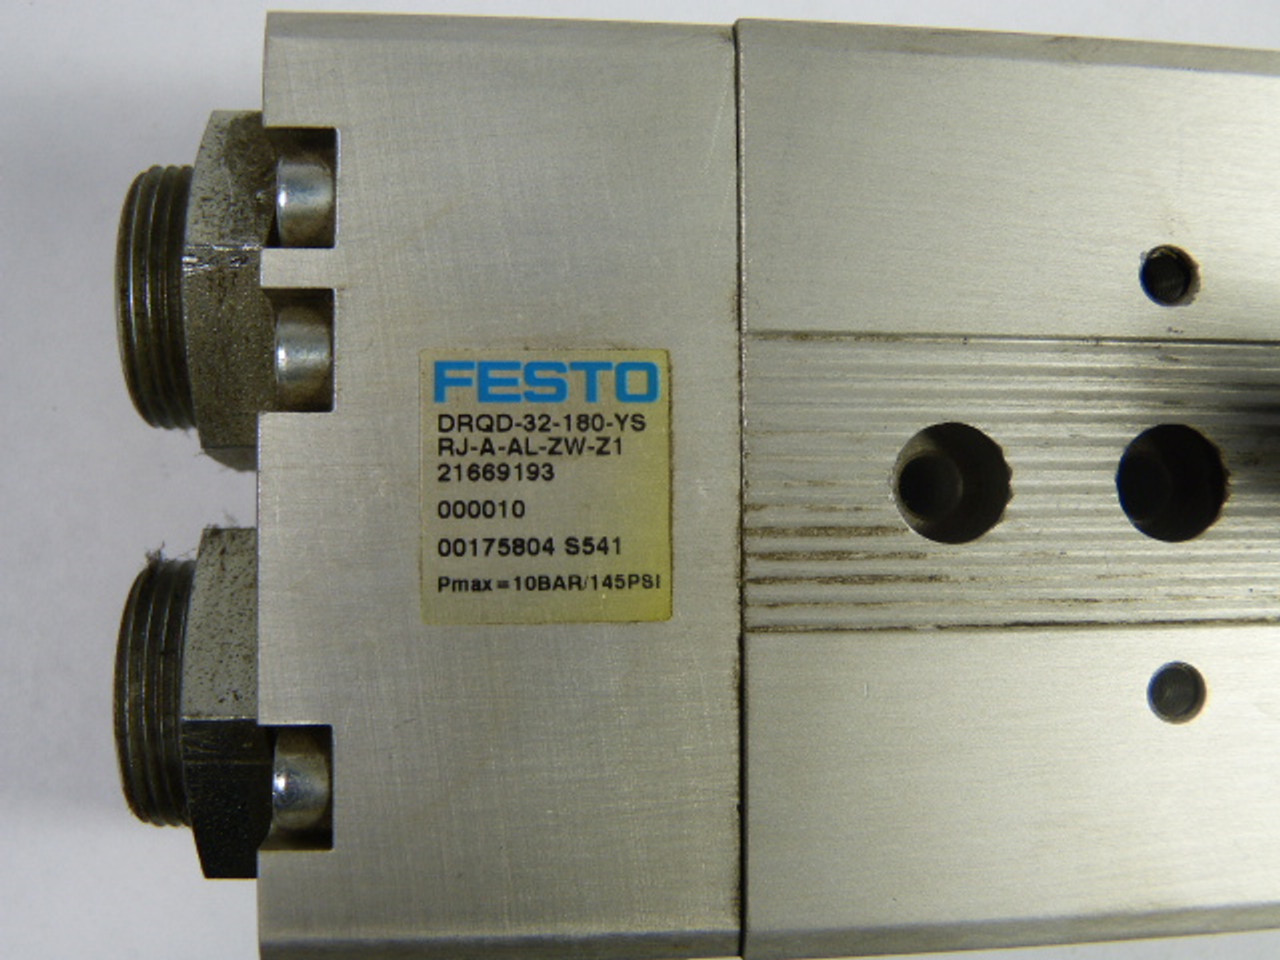 Festo DRQD-32-180-YS-RJ-A-AL-ZW-Z1 Actuator 21669193 USED